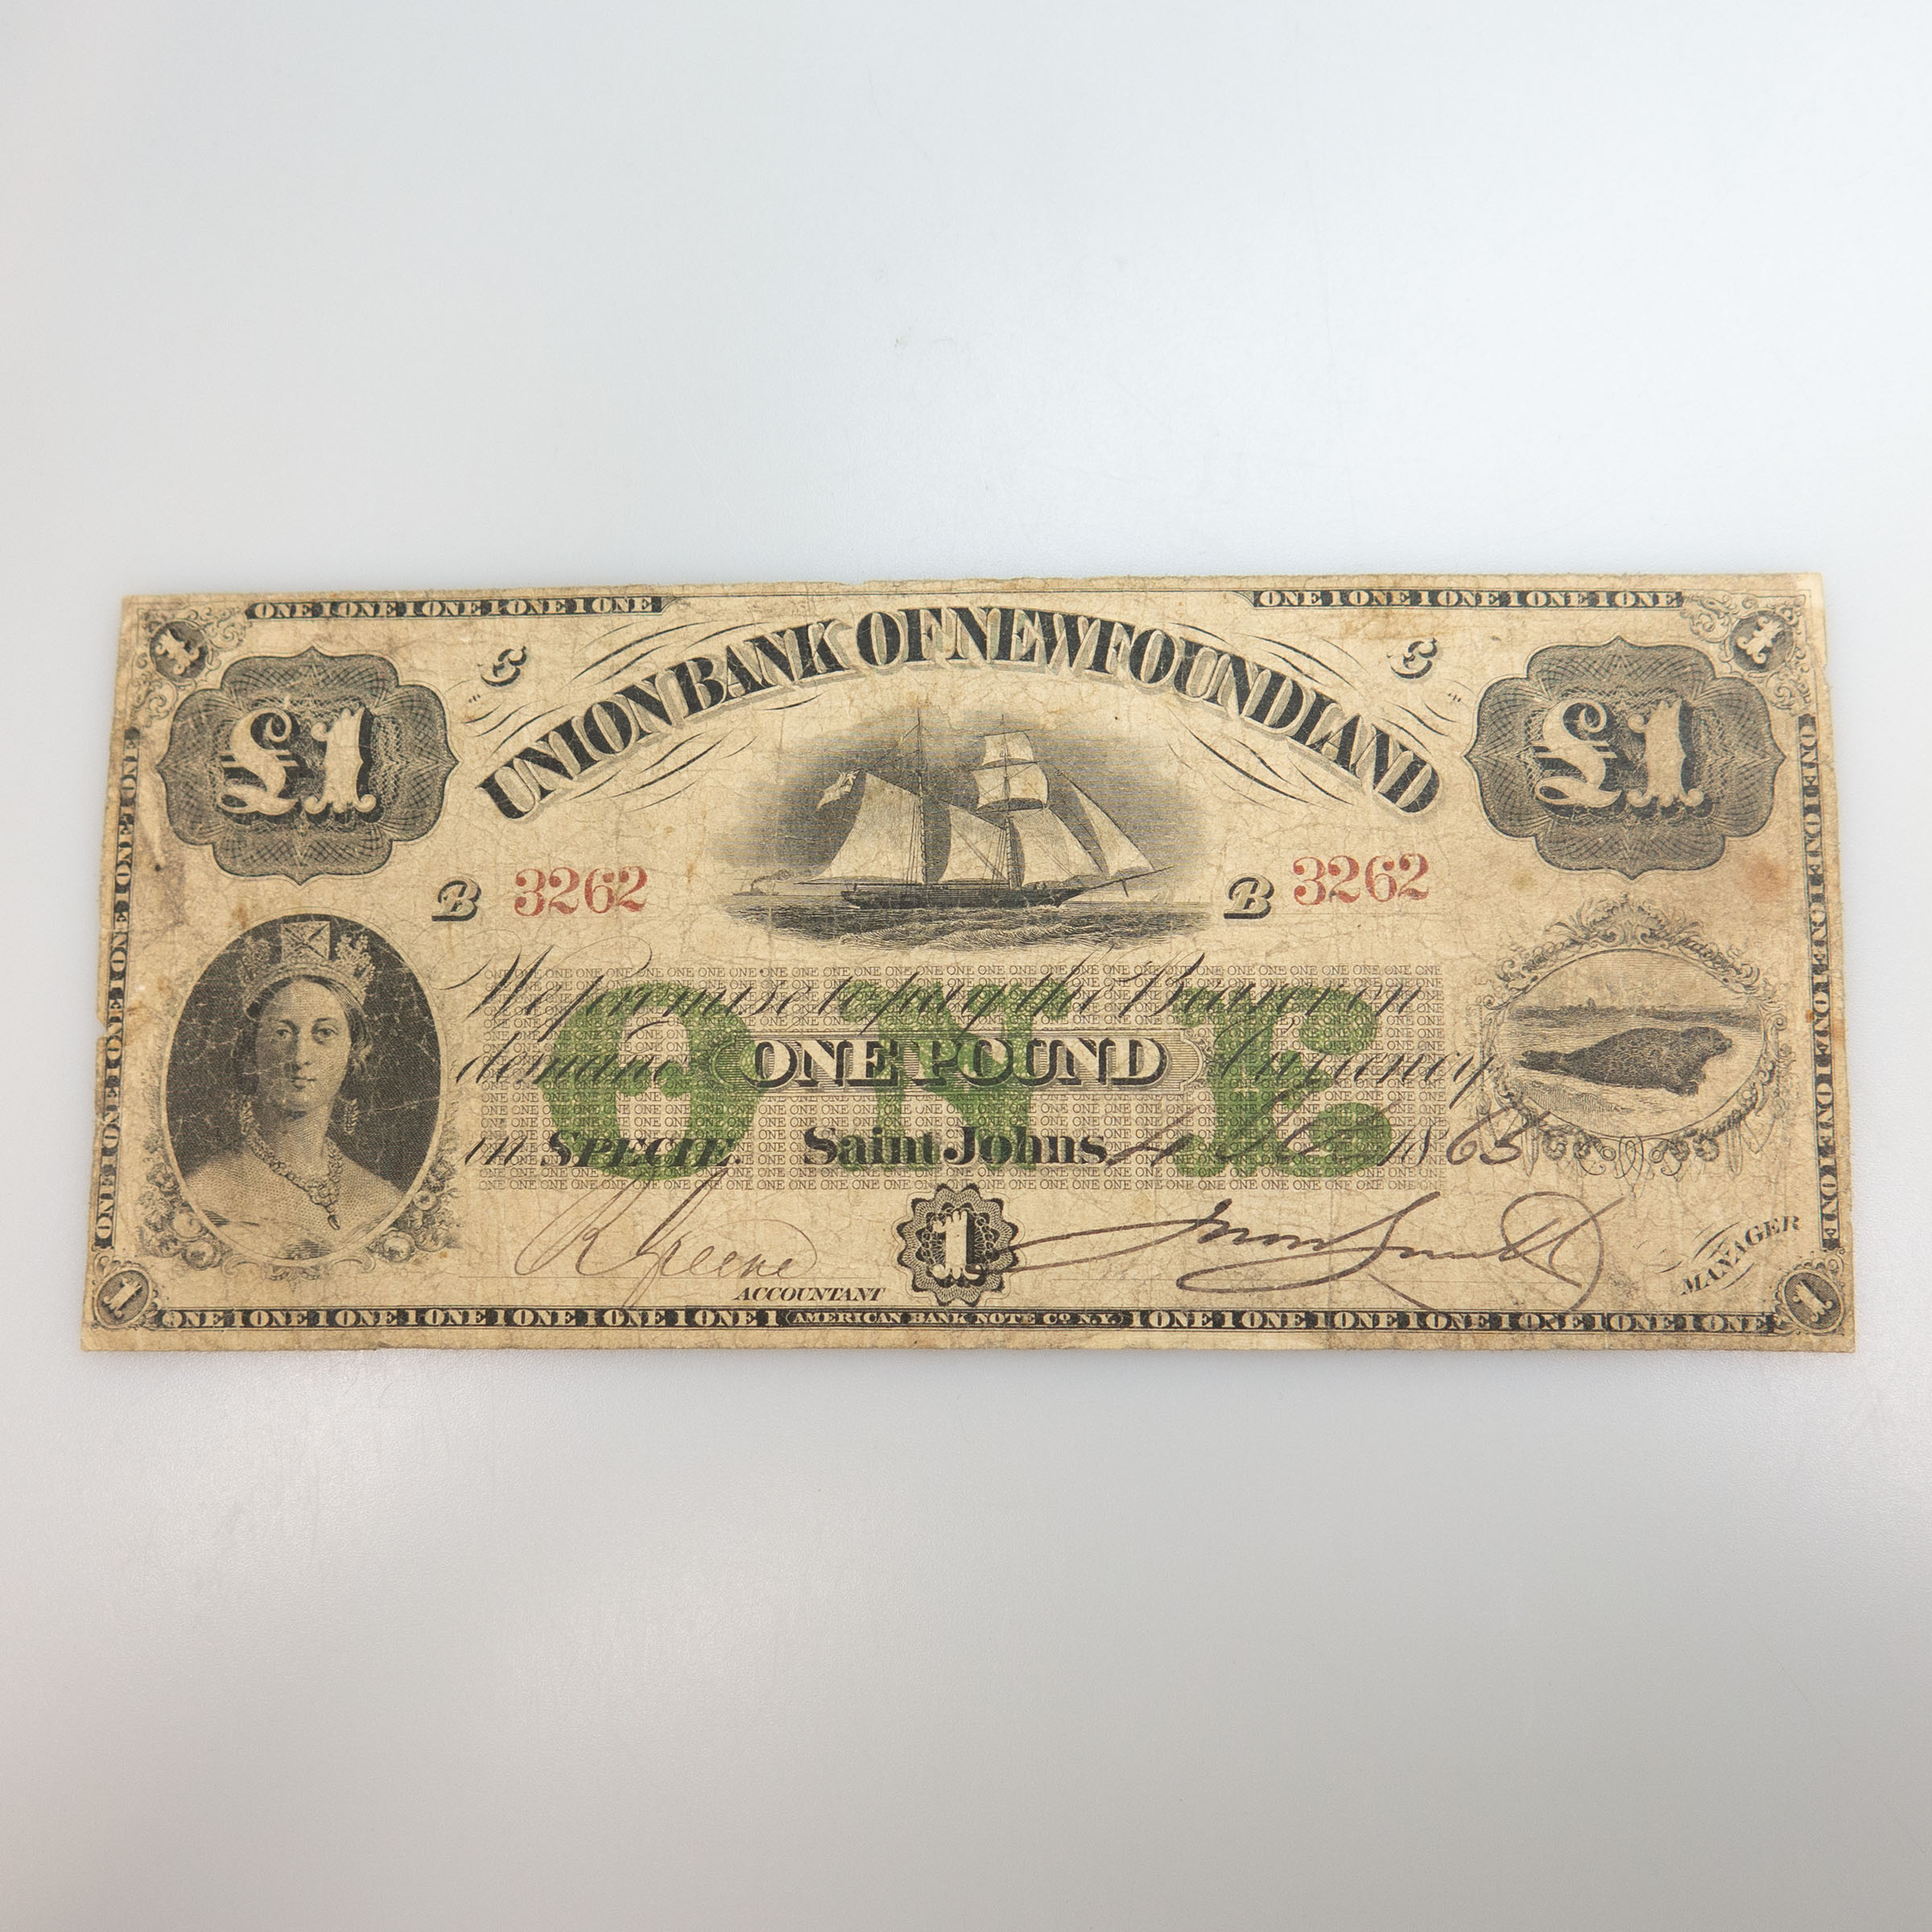 Union Bank Of Newfoundland 1865 1 Pound Bank Note